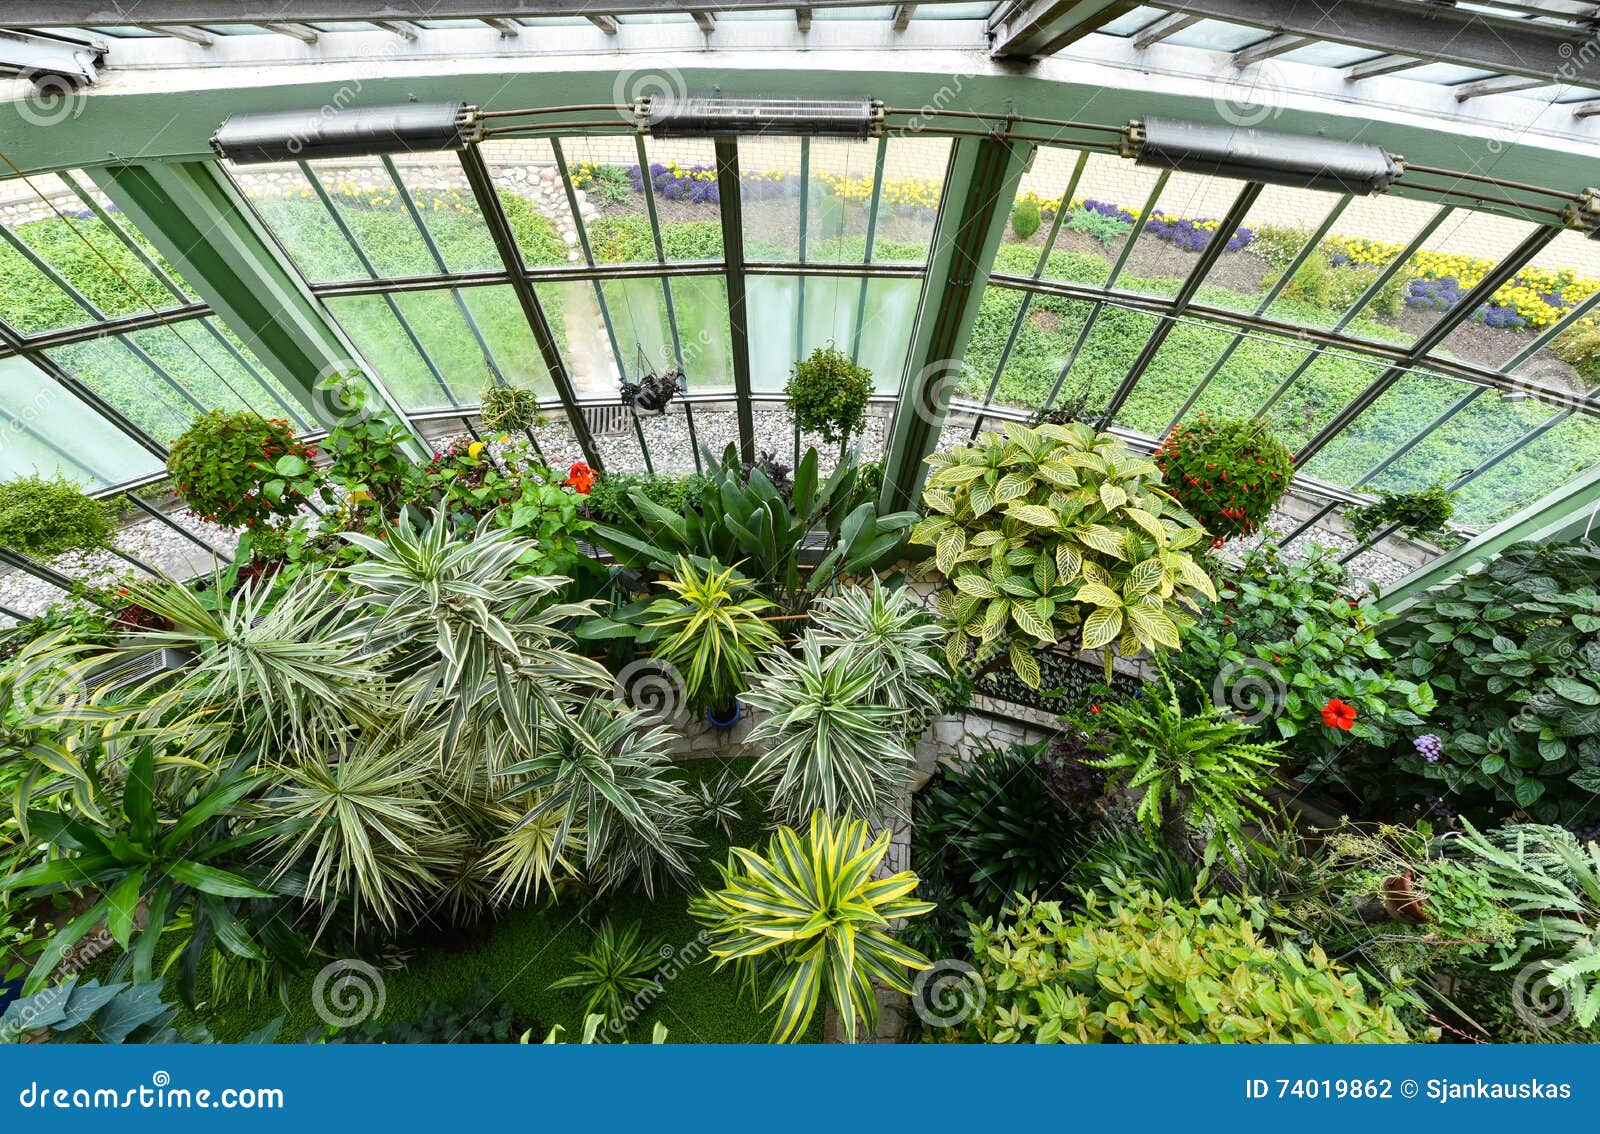 Indoor Botanical Gardens Near Me. brooklyn botanical garden year round indoor outdoor exhibits 